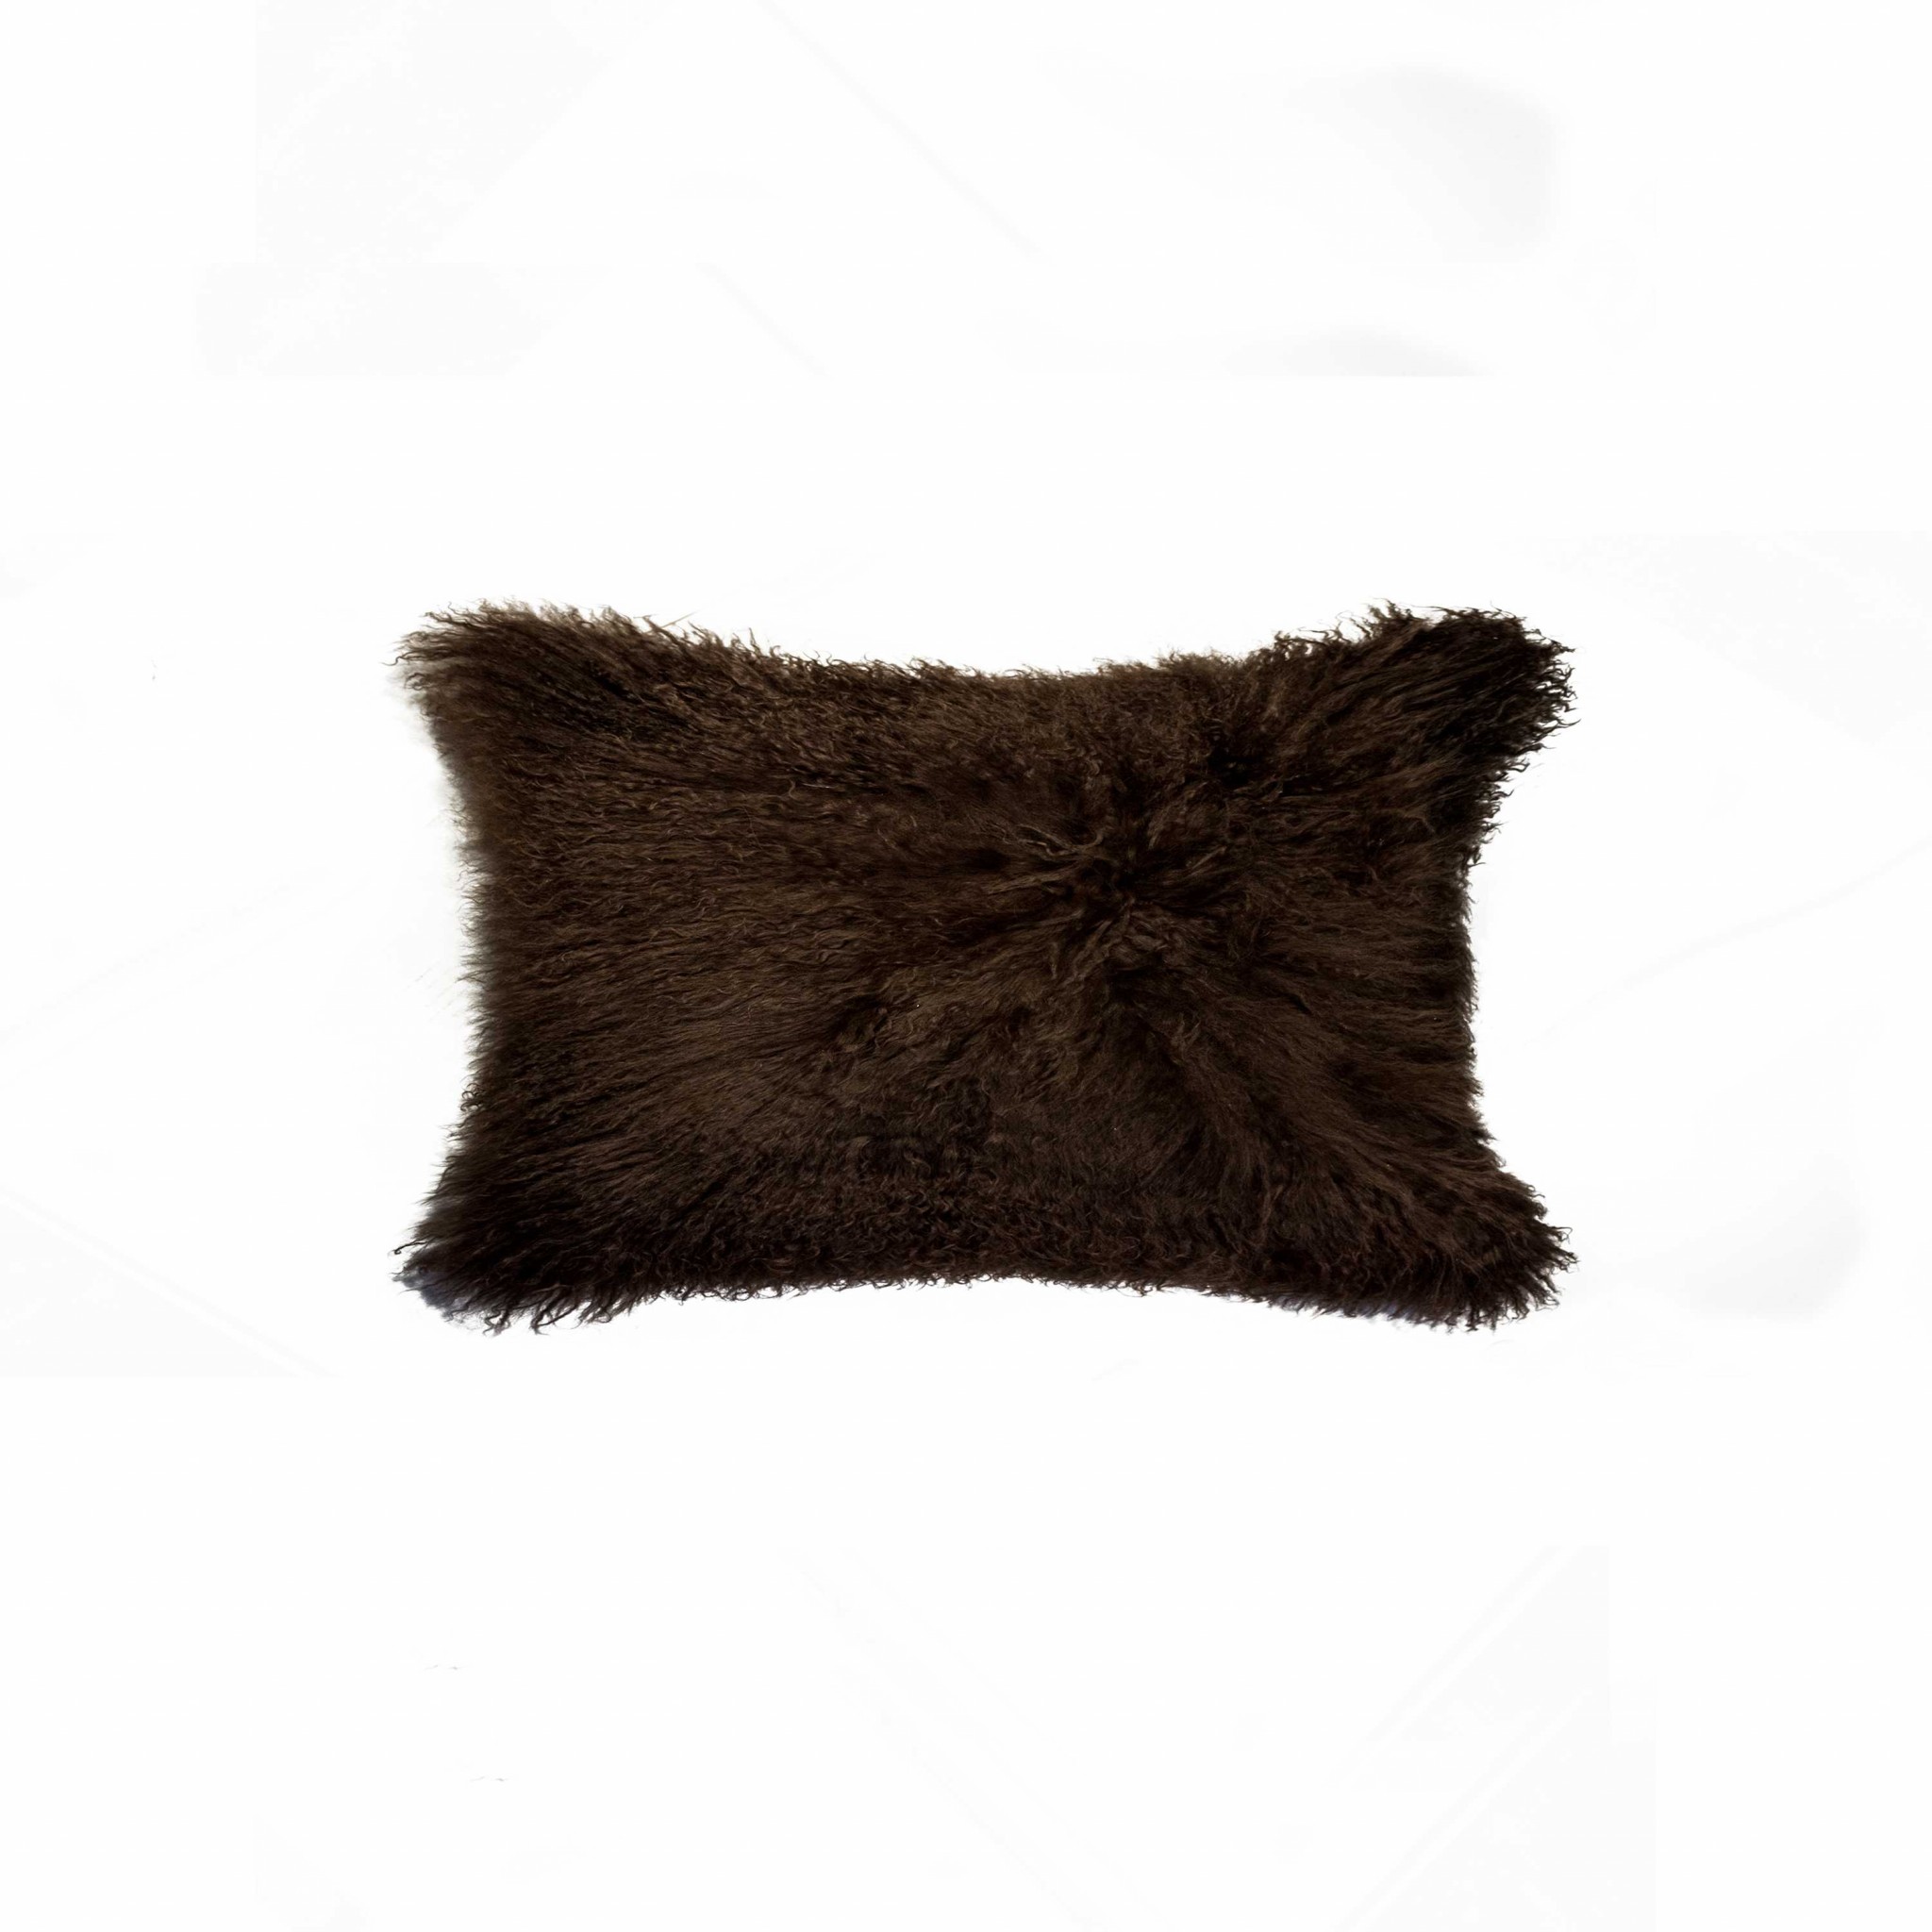 12" x 20" x 5" Chocolate Sheepskin - Pillow